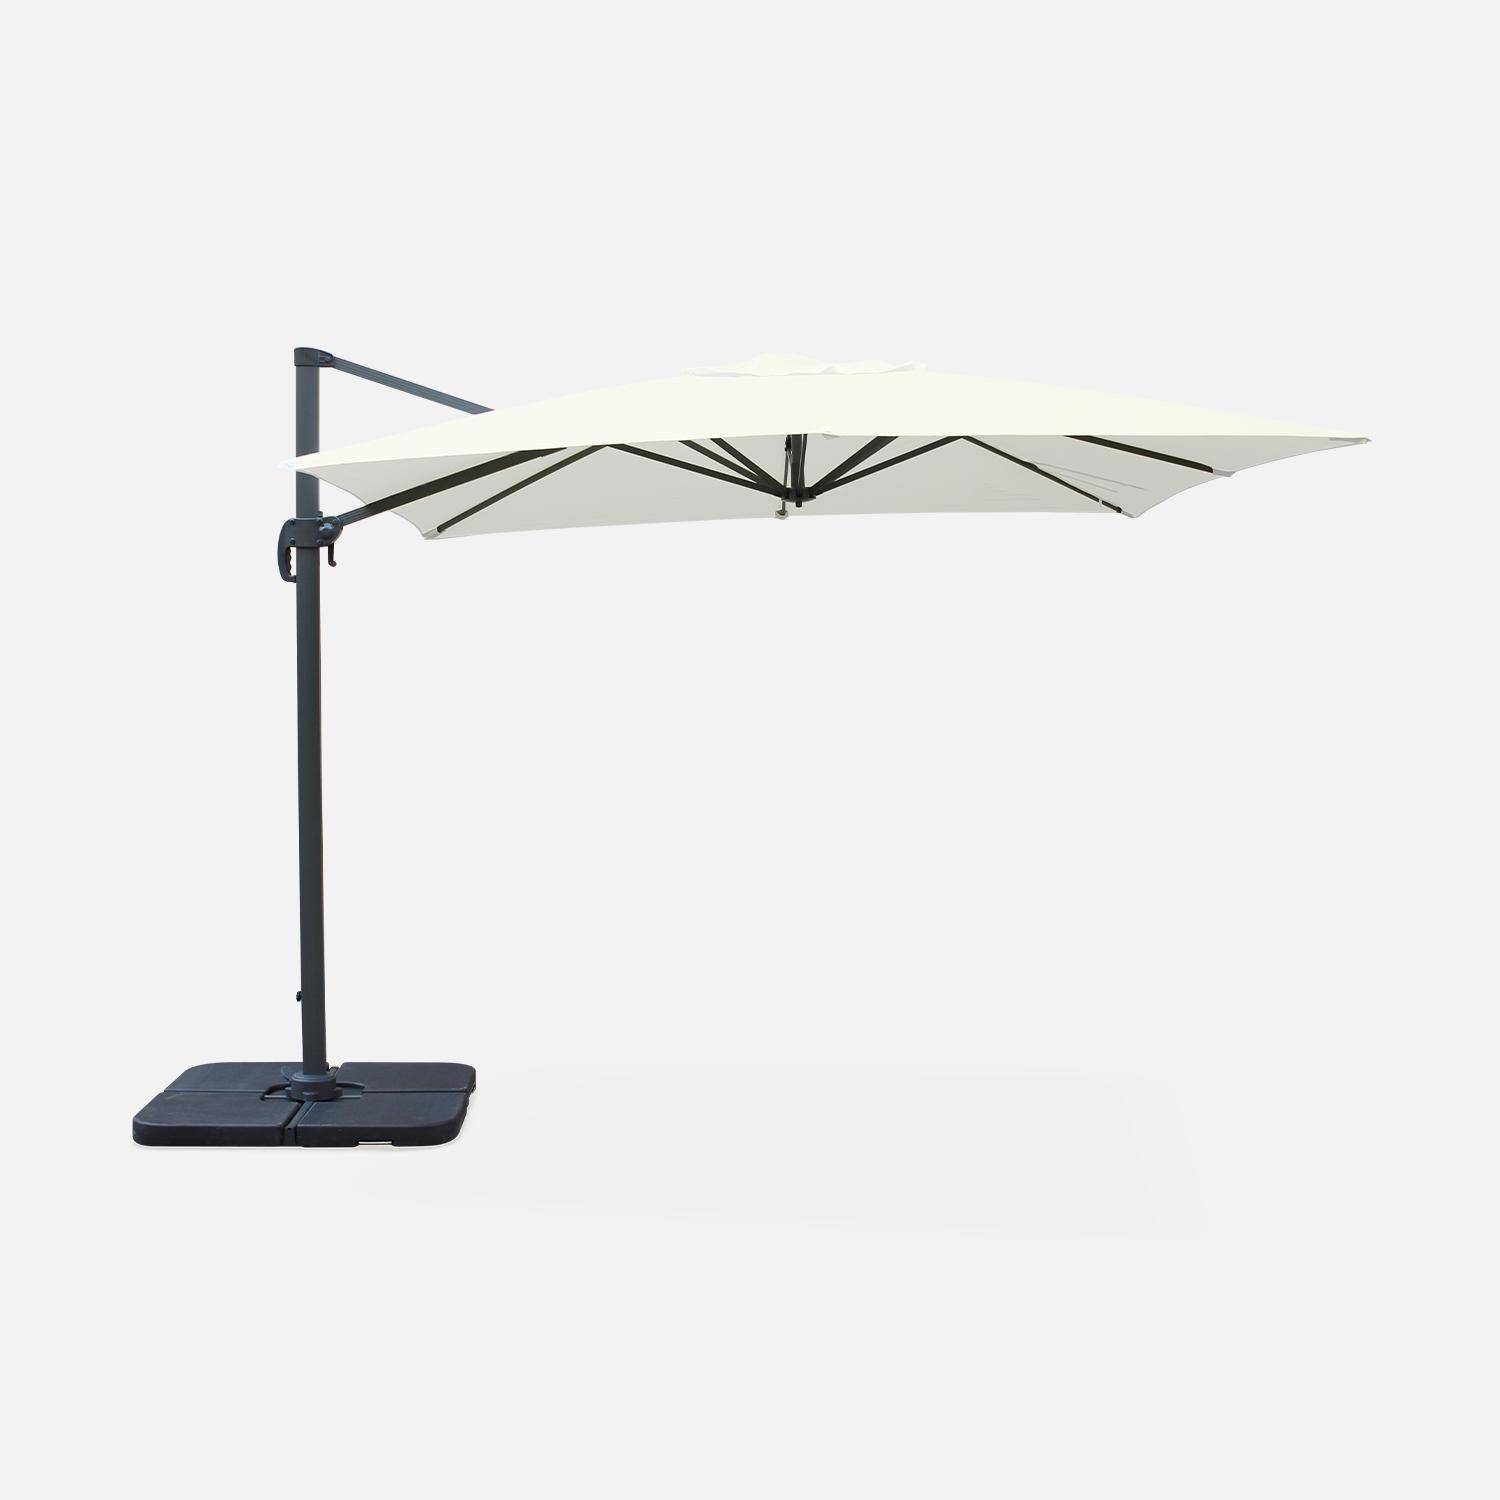 Square cantilever parasol 3x3m - Falgos - Off-white Photo4